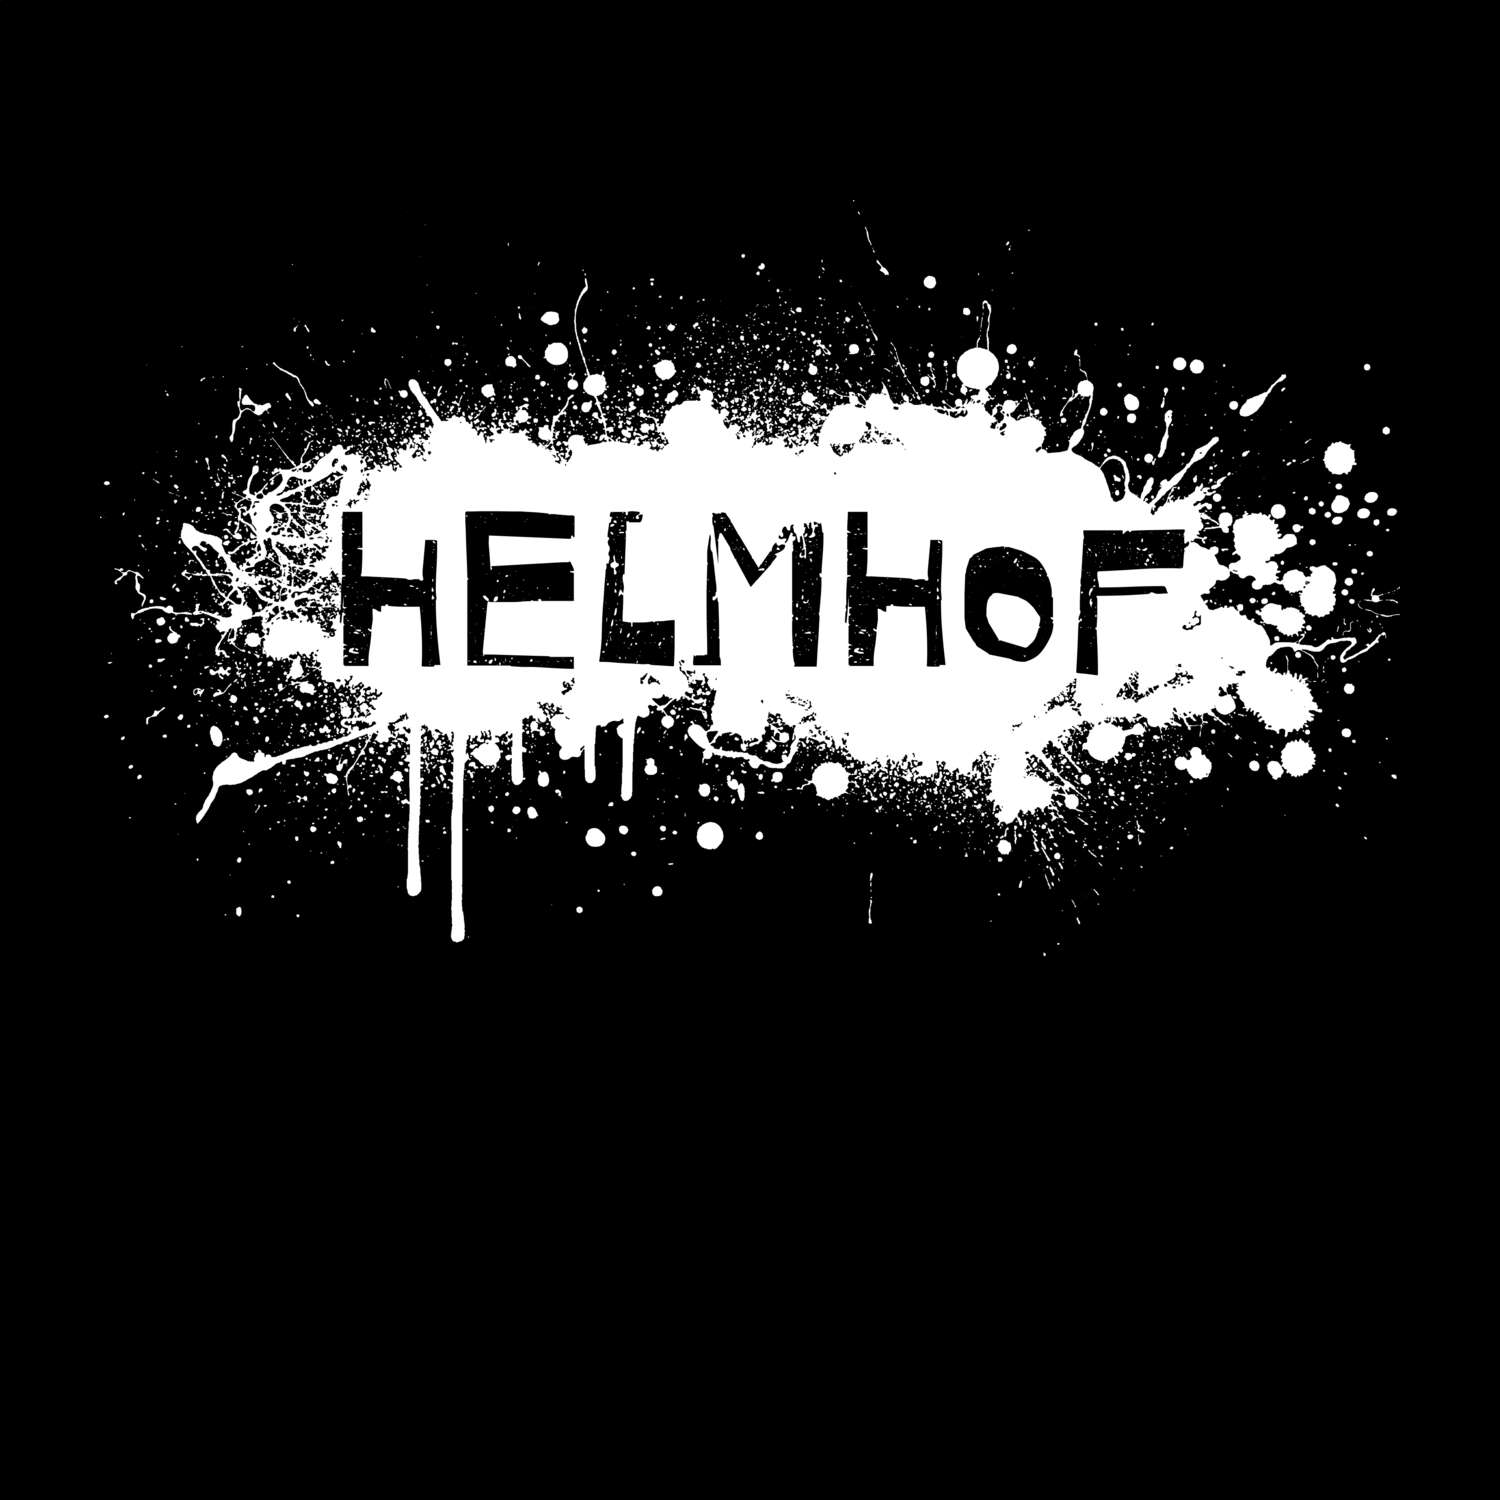 Helmhof T-Shirt »Paint Splash Punk«